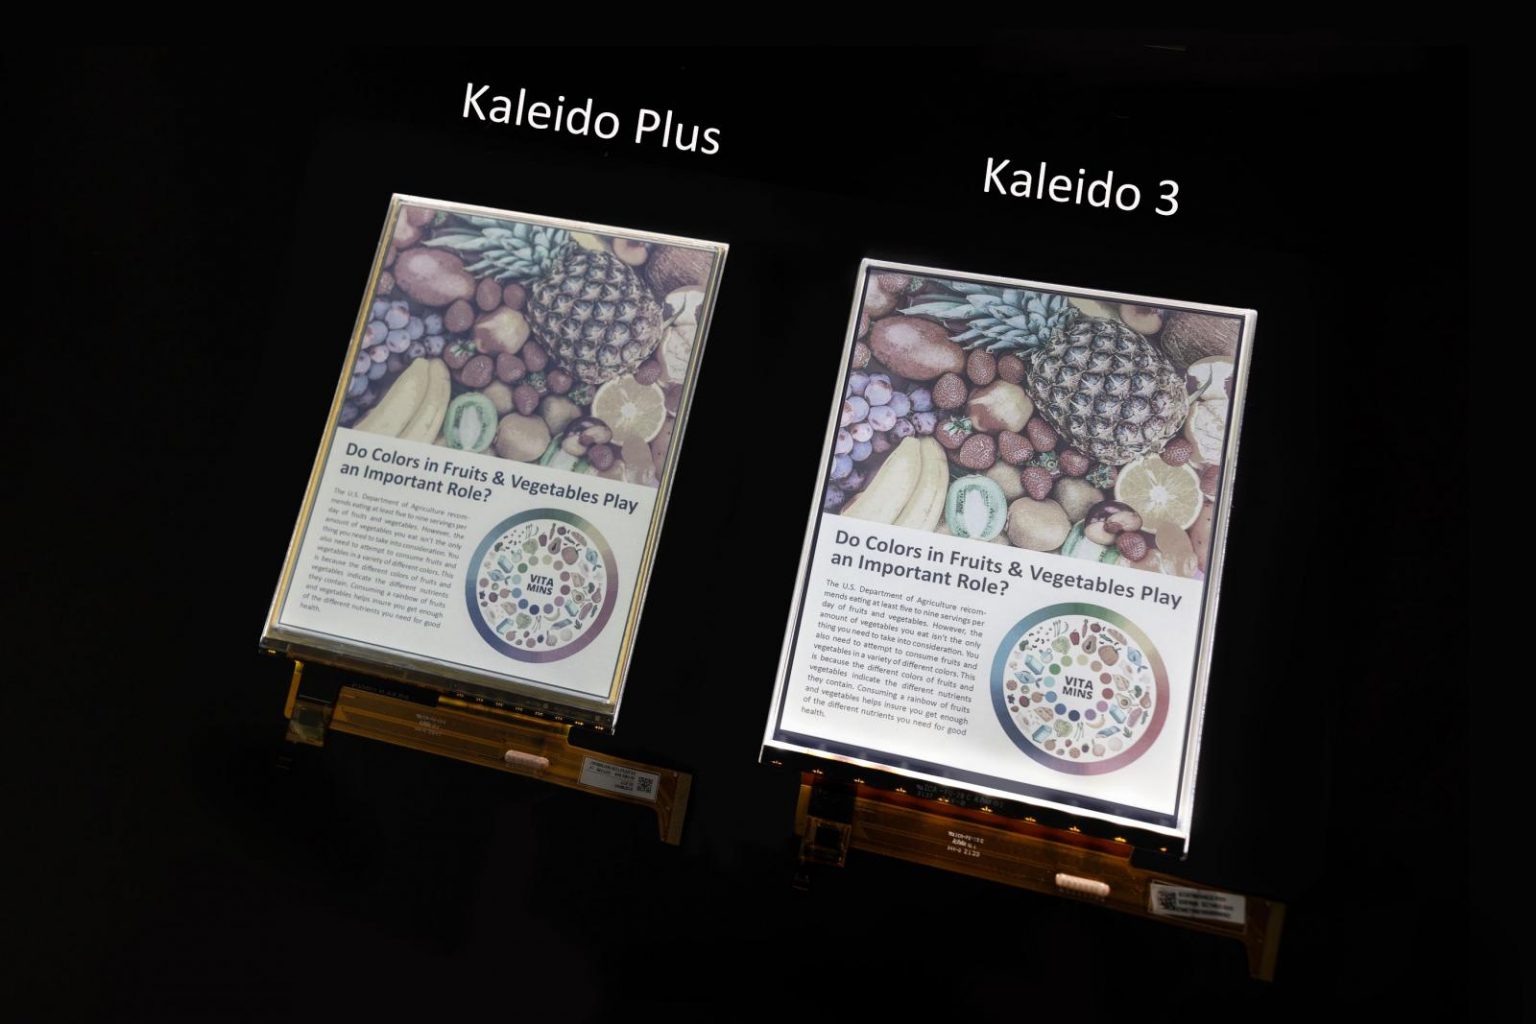 Представлены бумагоподобные цветные экраны E Ink Kaleido 3 для электронных книг